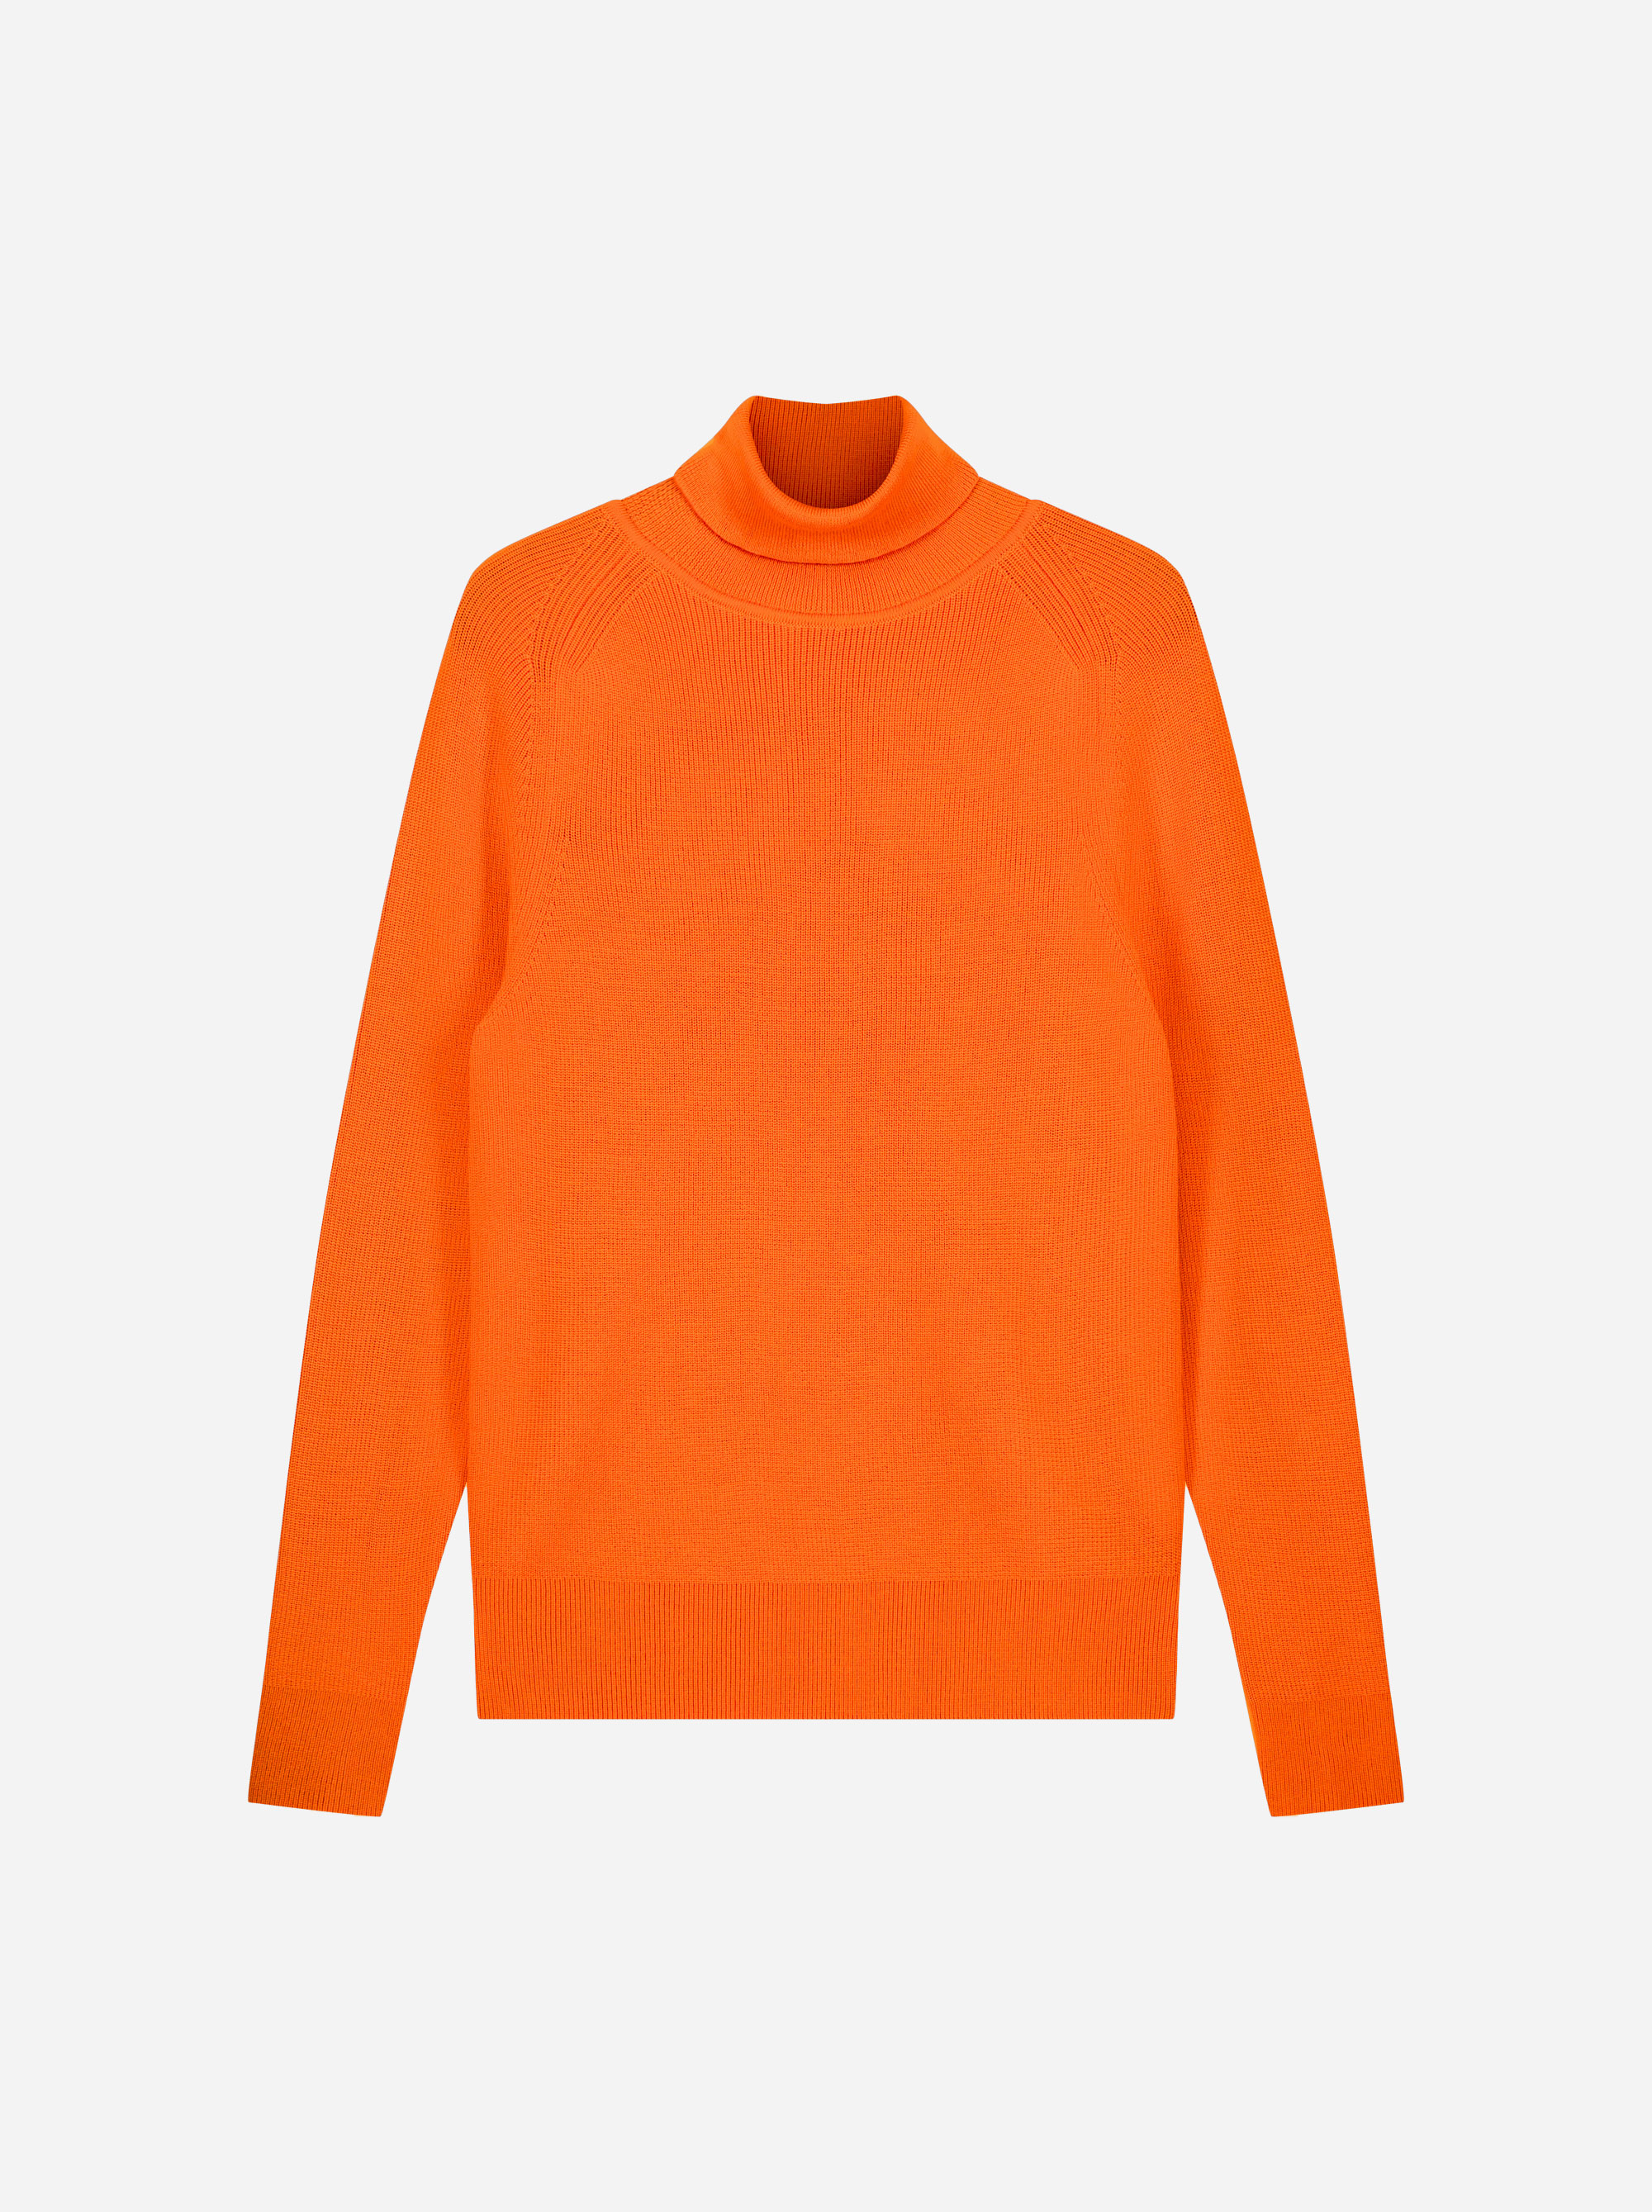 Teym - Turtleneck - The Merino Sweater - Women - Orange - 3